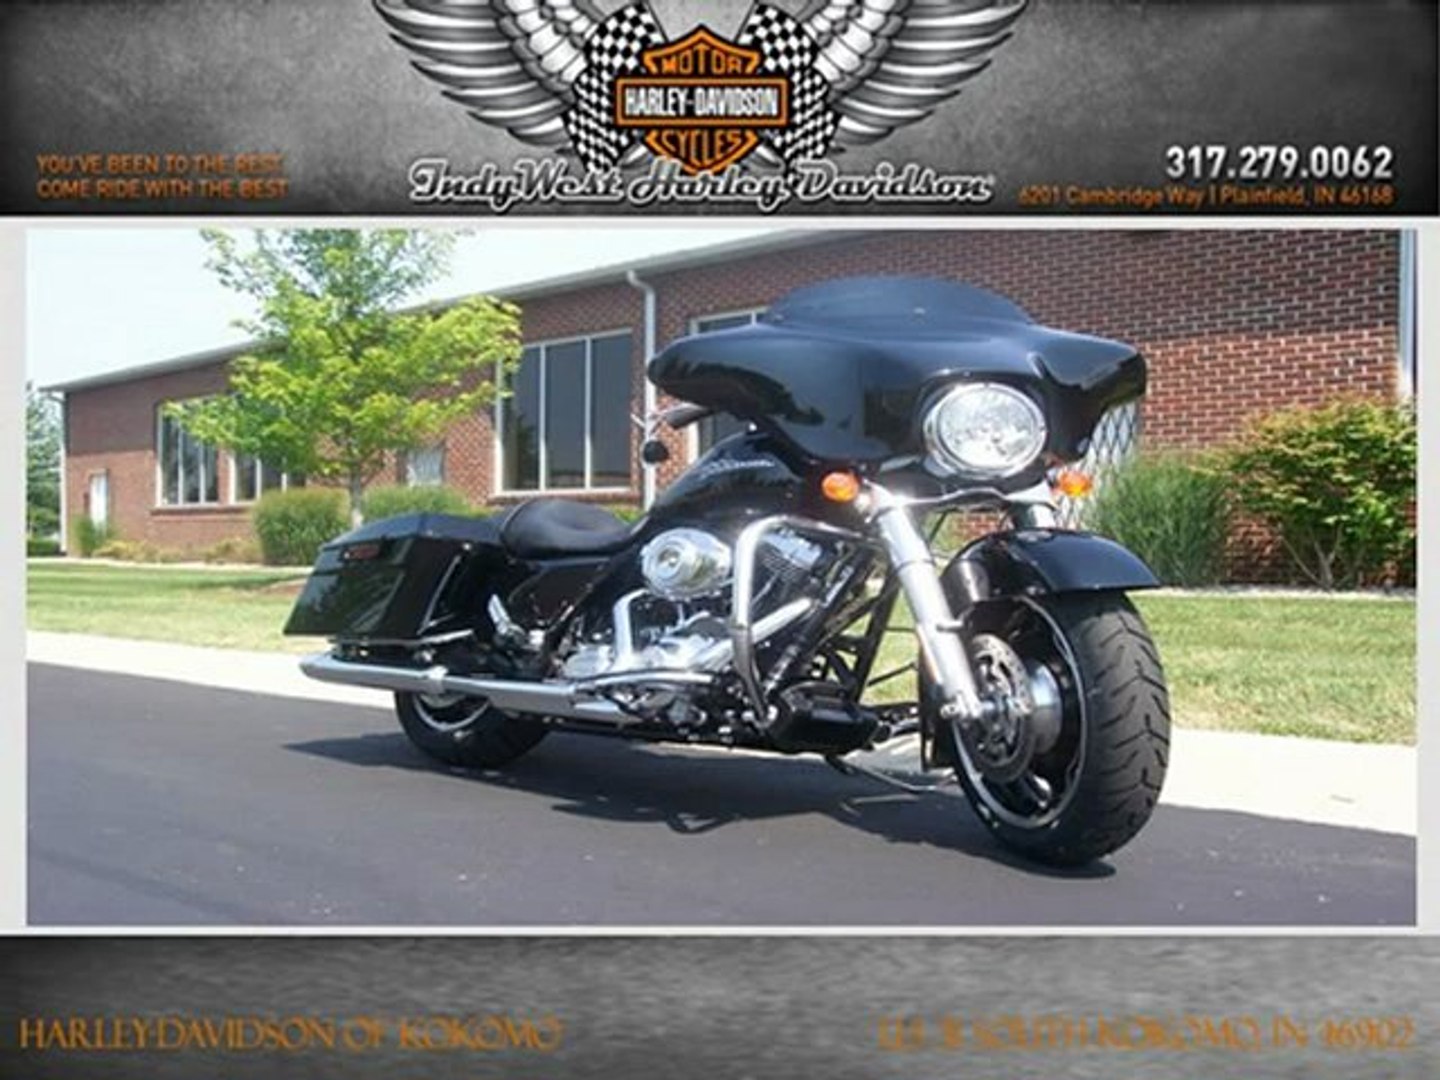 Indianapolis Harley Davidson Dealers | Motorcycle